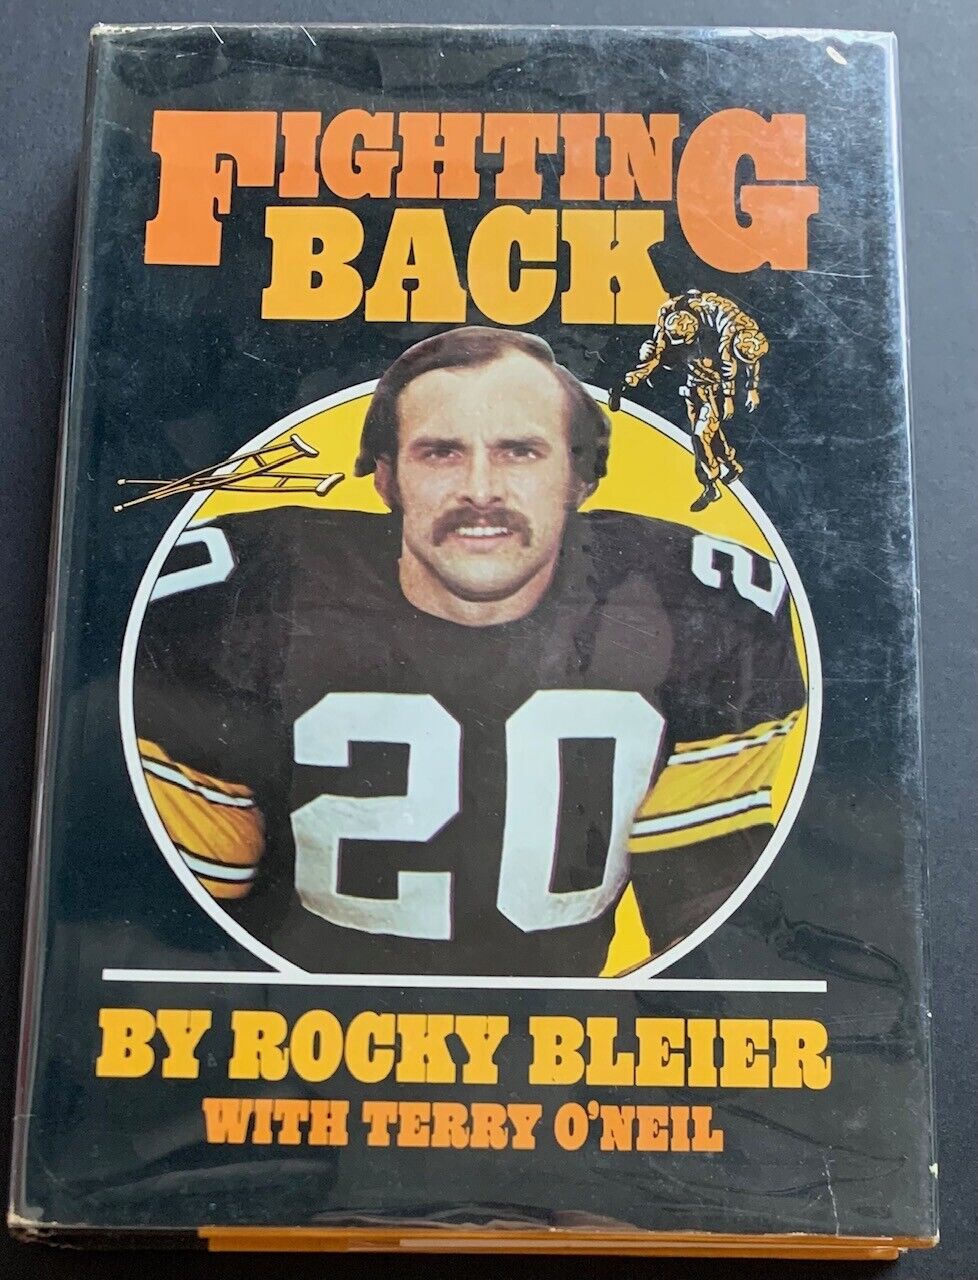 1975 Rocky Bleier Signed Fighting Back Hardcover Football Book NFL Vintage